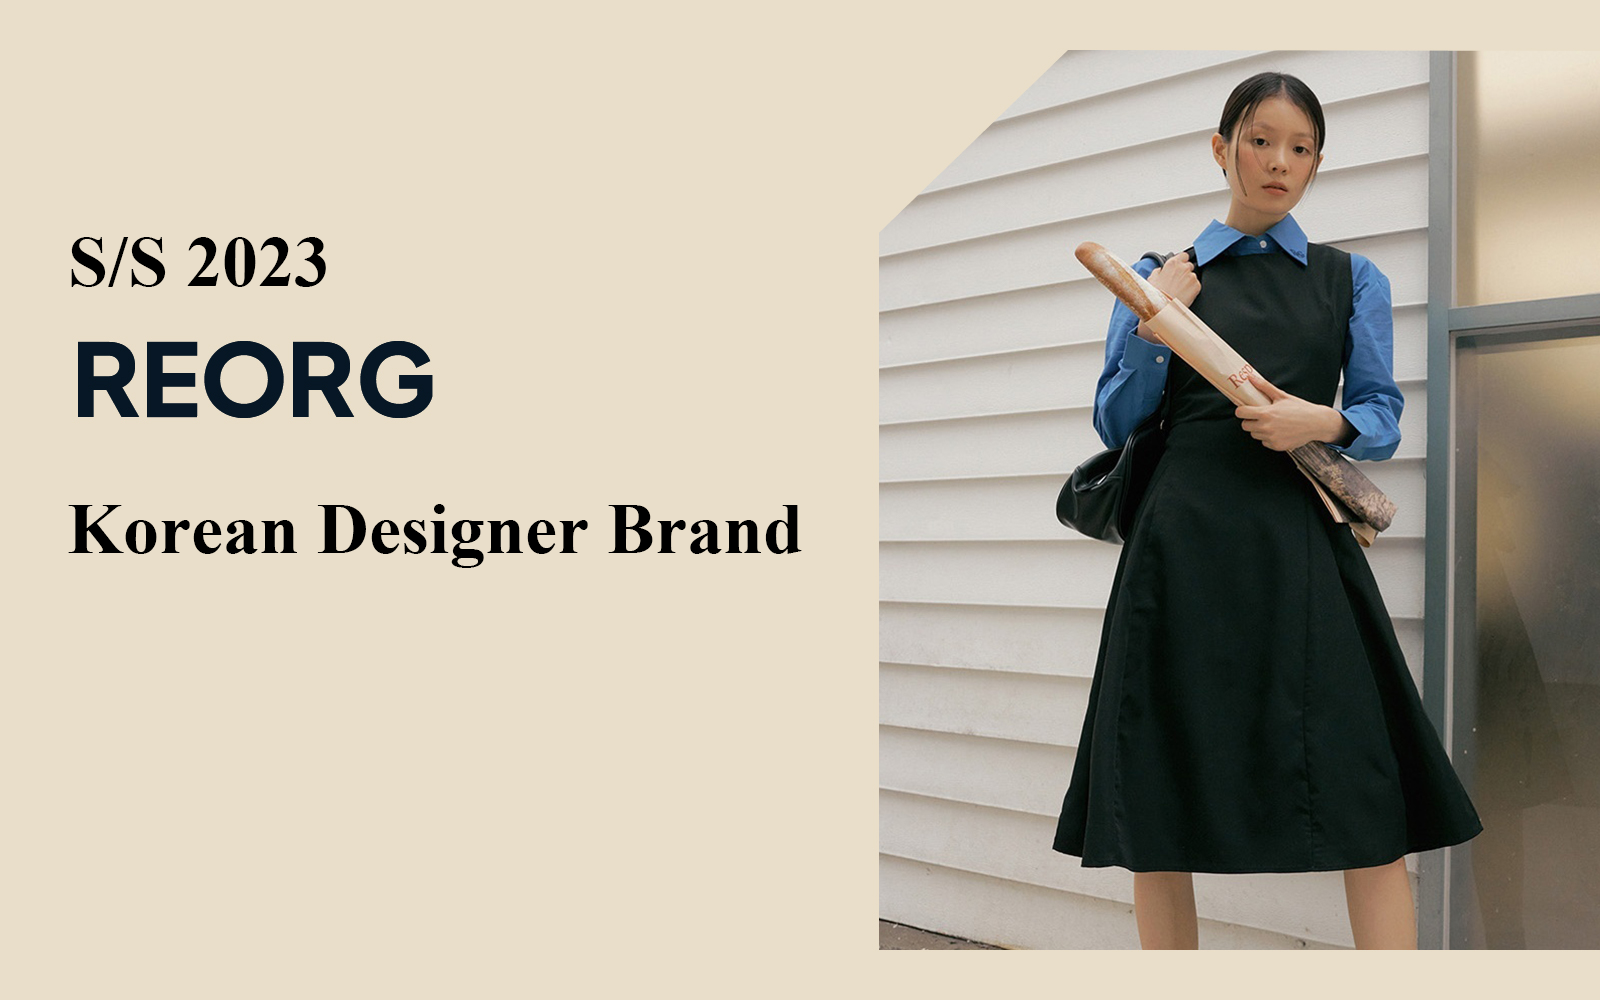 The Analysis of REORG The Womenswear Designer Brand